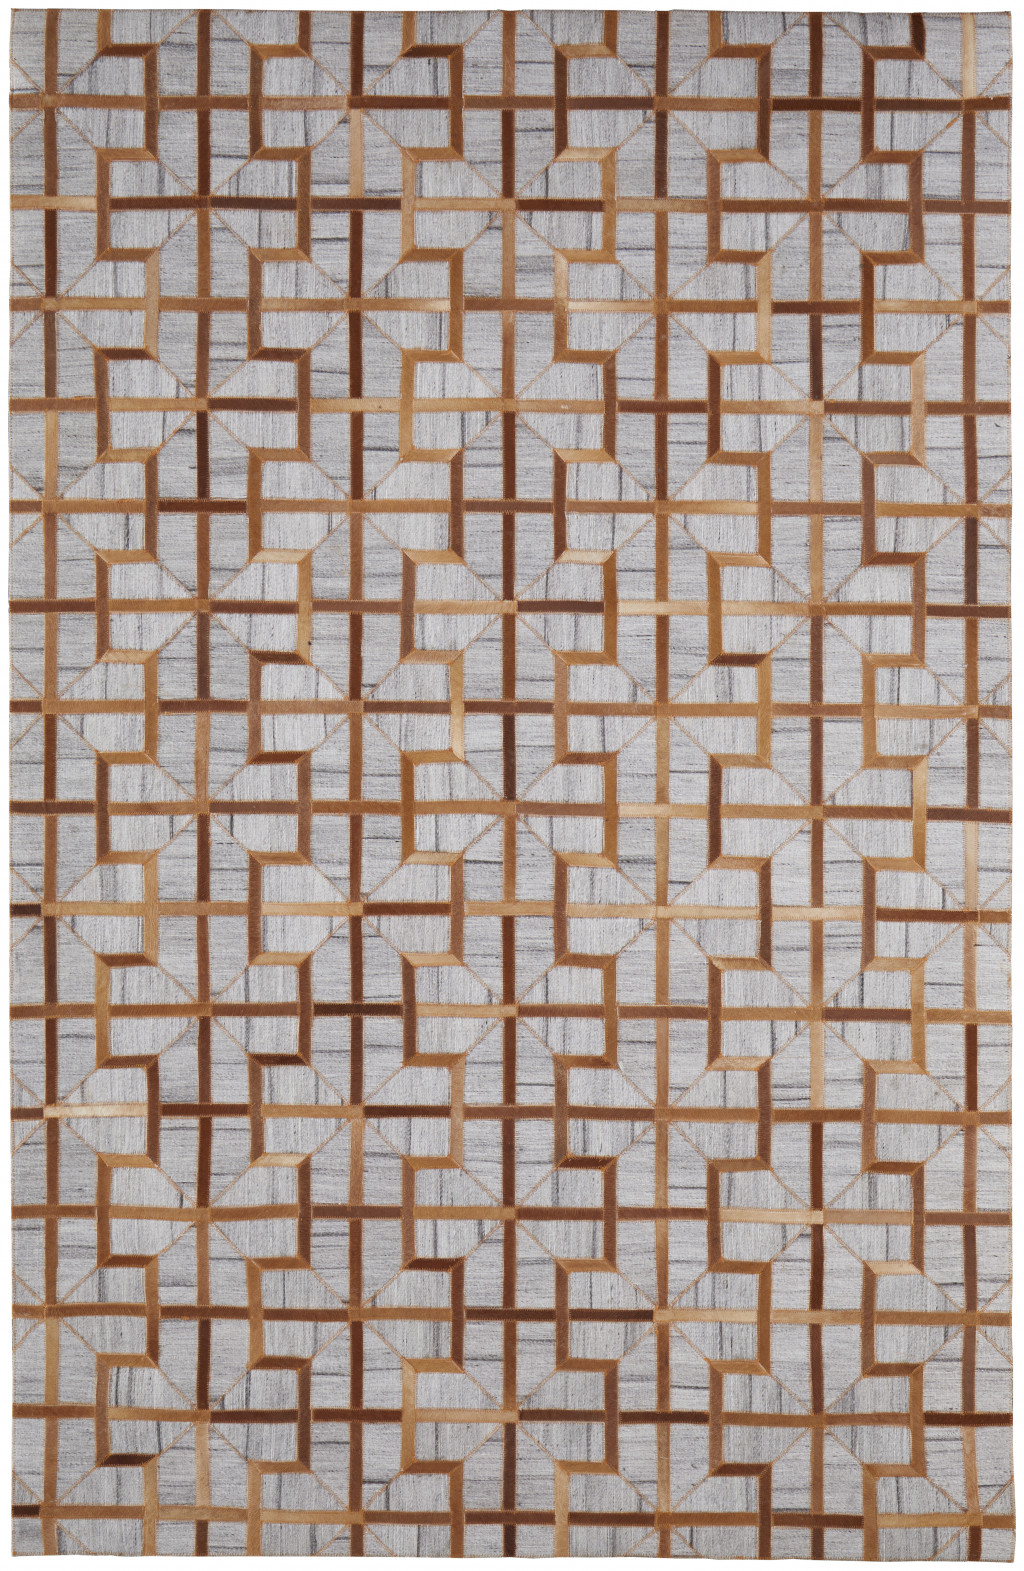 5' X 8' Tan Brown And Gray Geometric Hand Woven Area Rug-511808-1